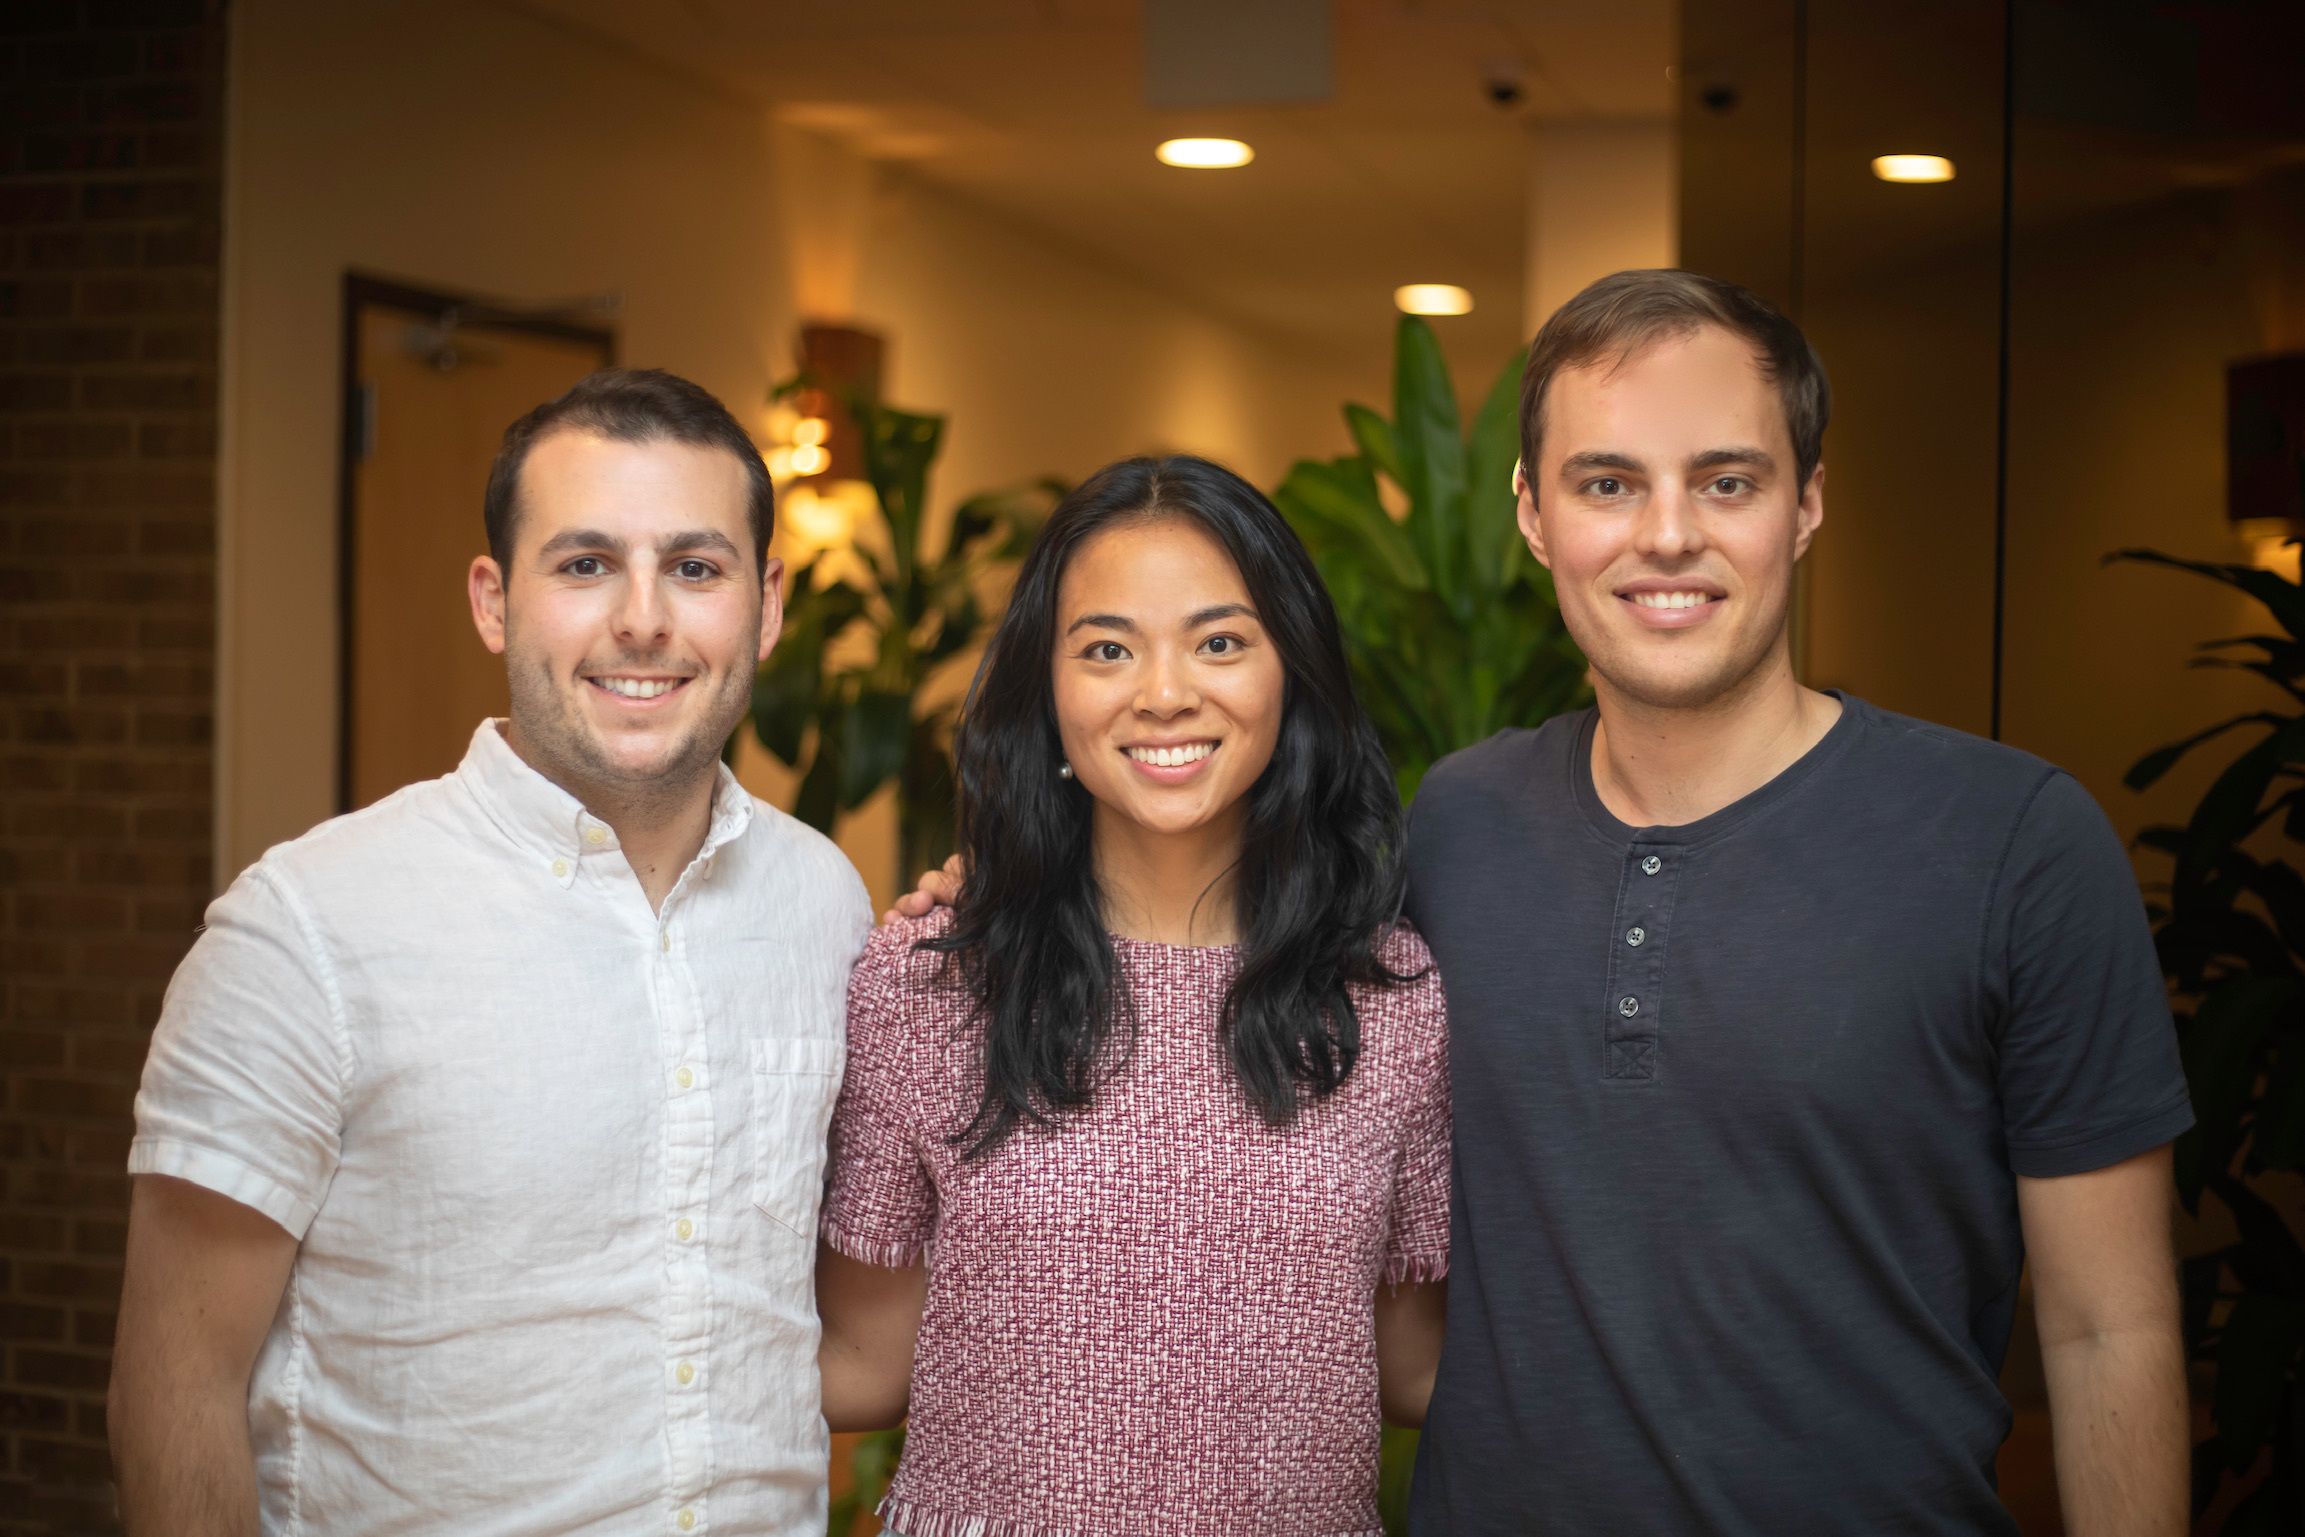 The Nourish co-founding team: Sam Perkins, Stephanie Liu, and Aidan Dewar.